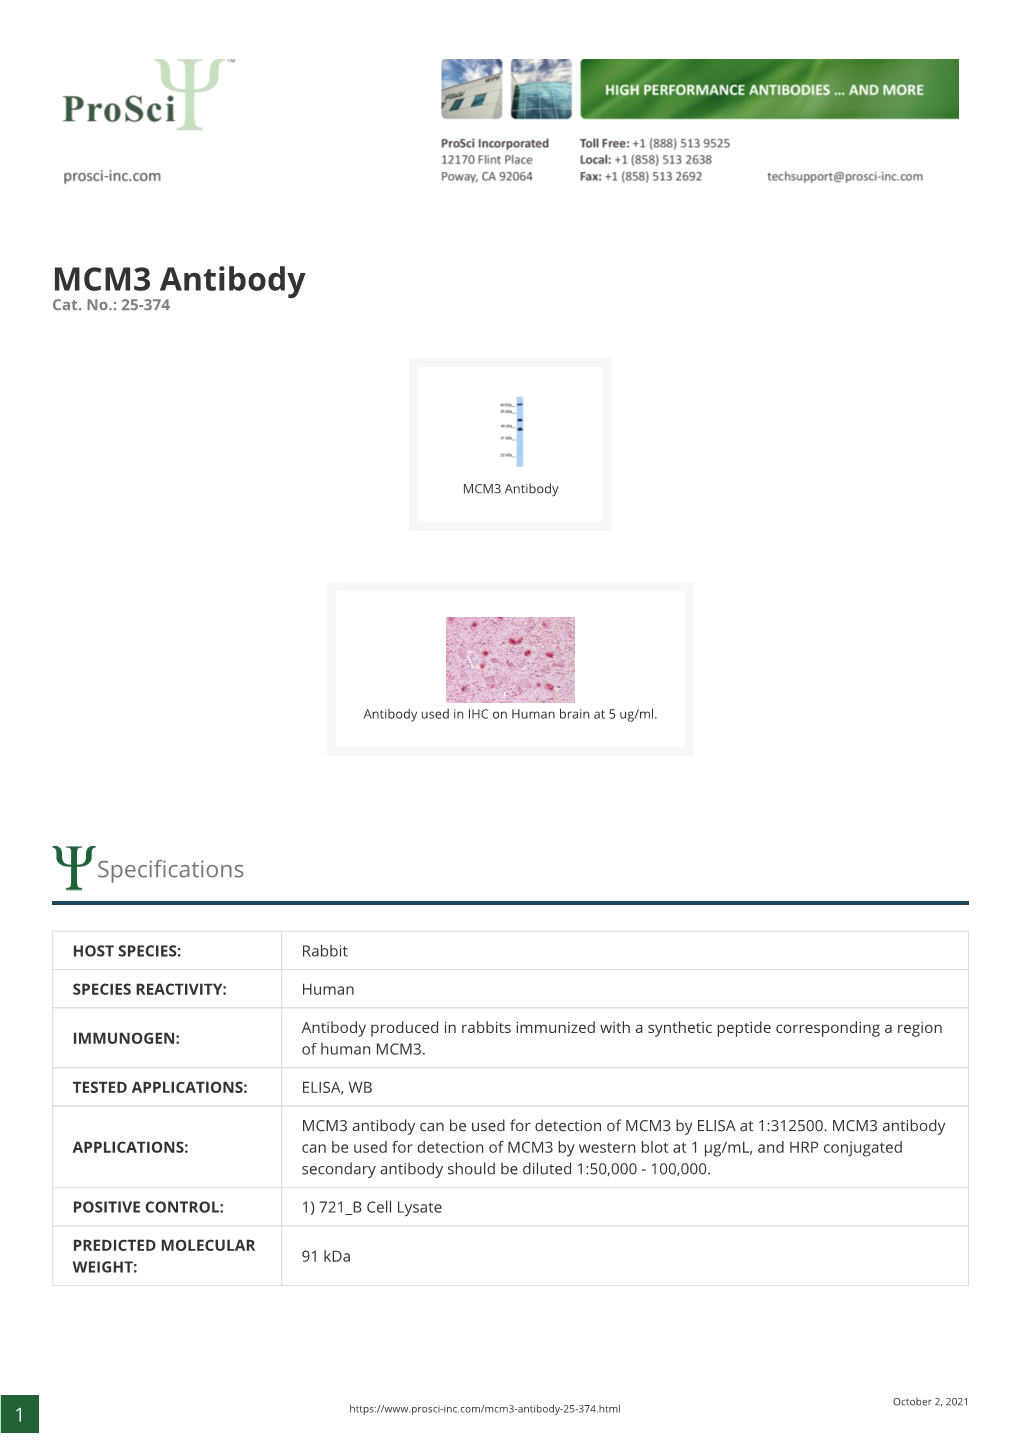 MCM3 Antibody Cat